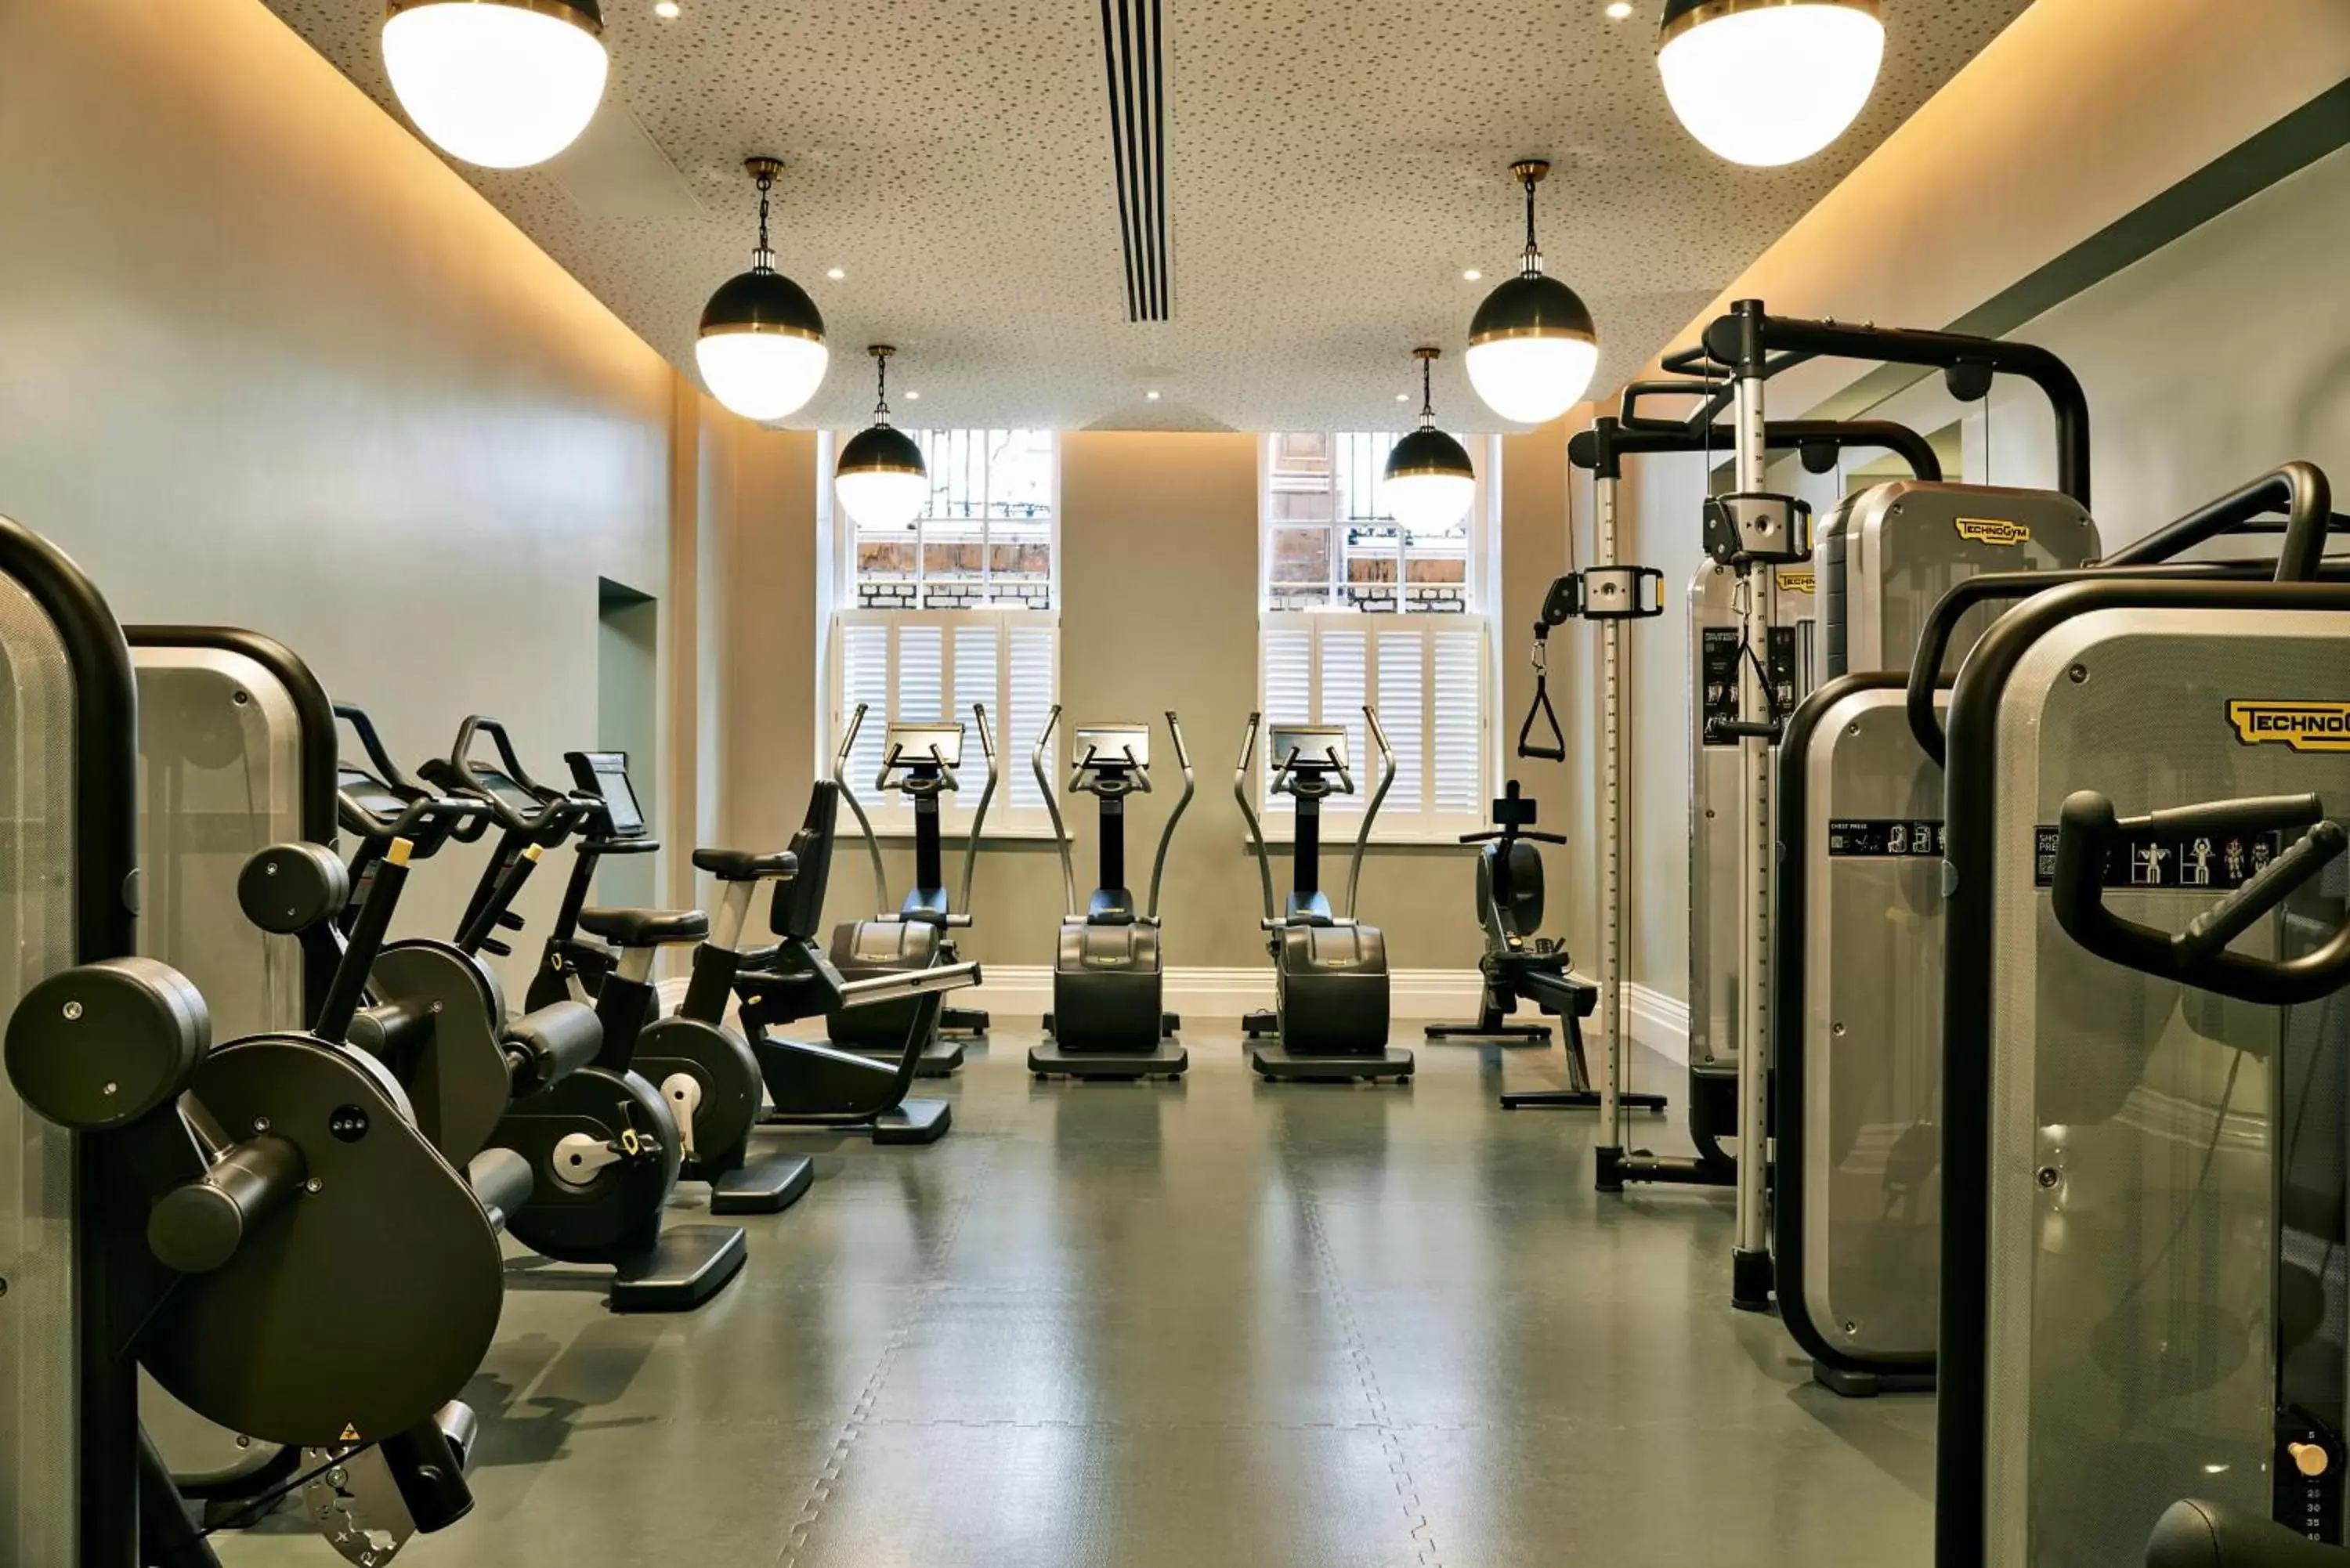 Fitness centre/facilities, Fitness Center/Facilities in Kimpton - Fitzroy London, an IHG Hotel